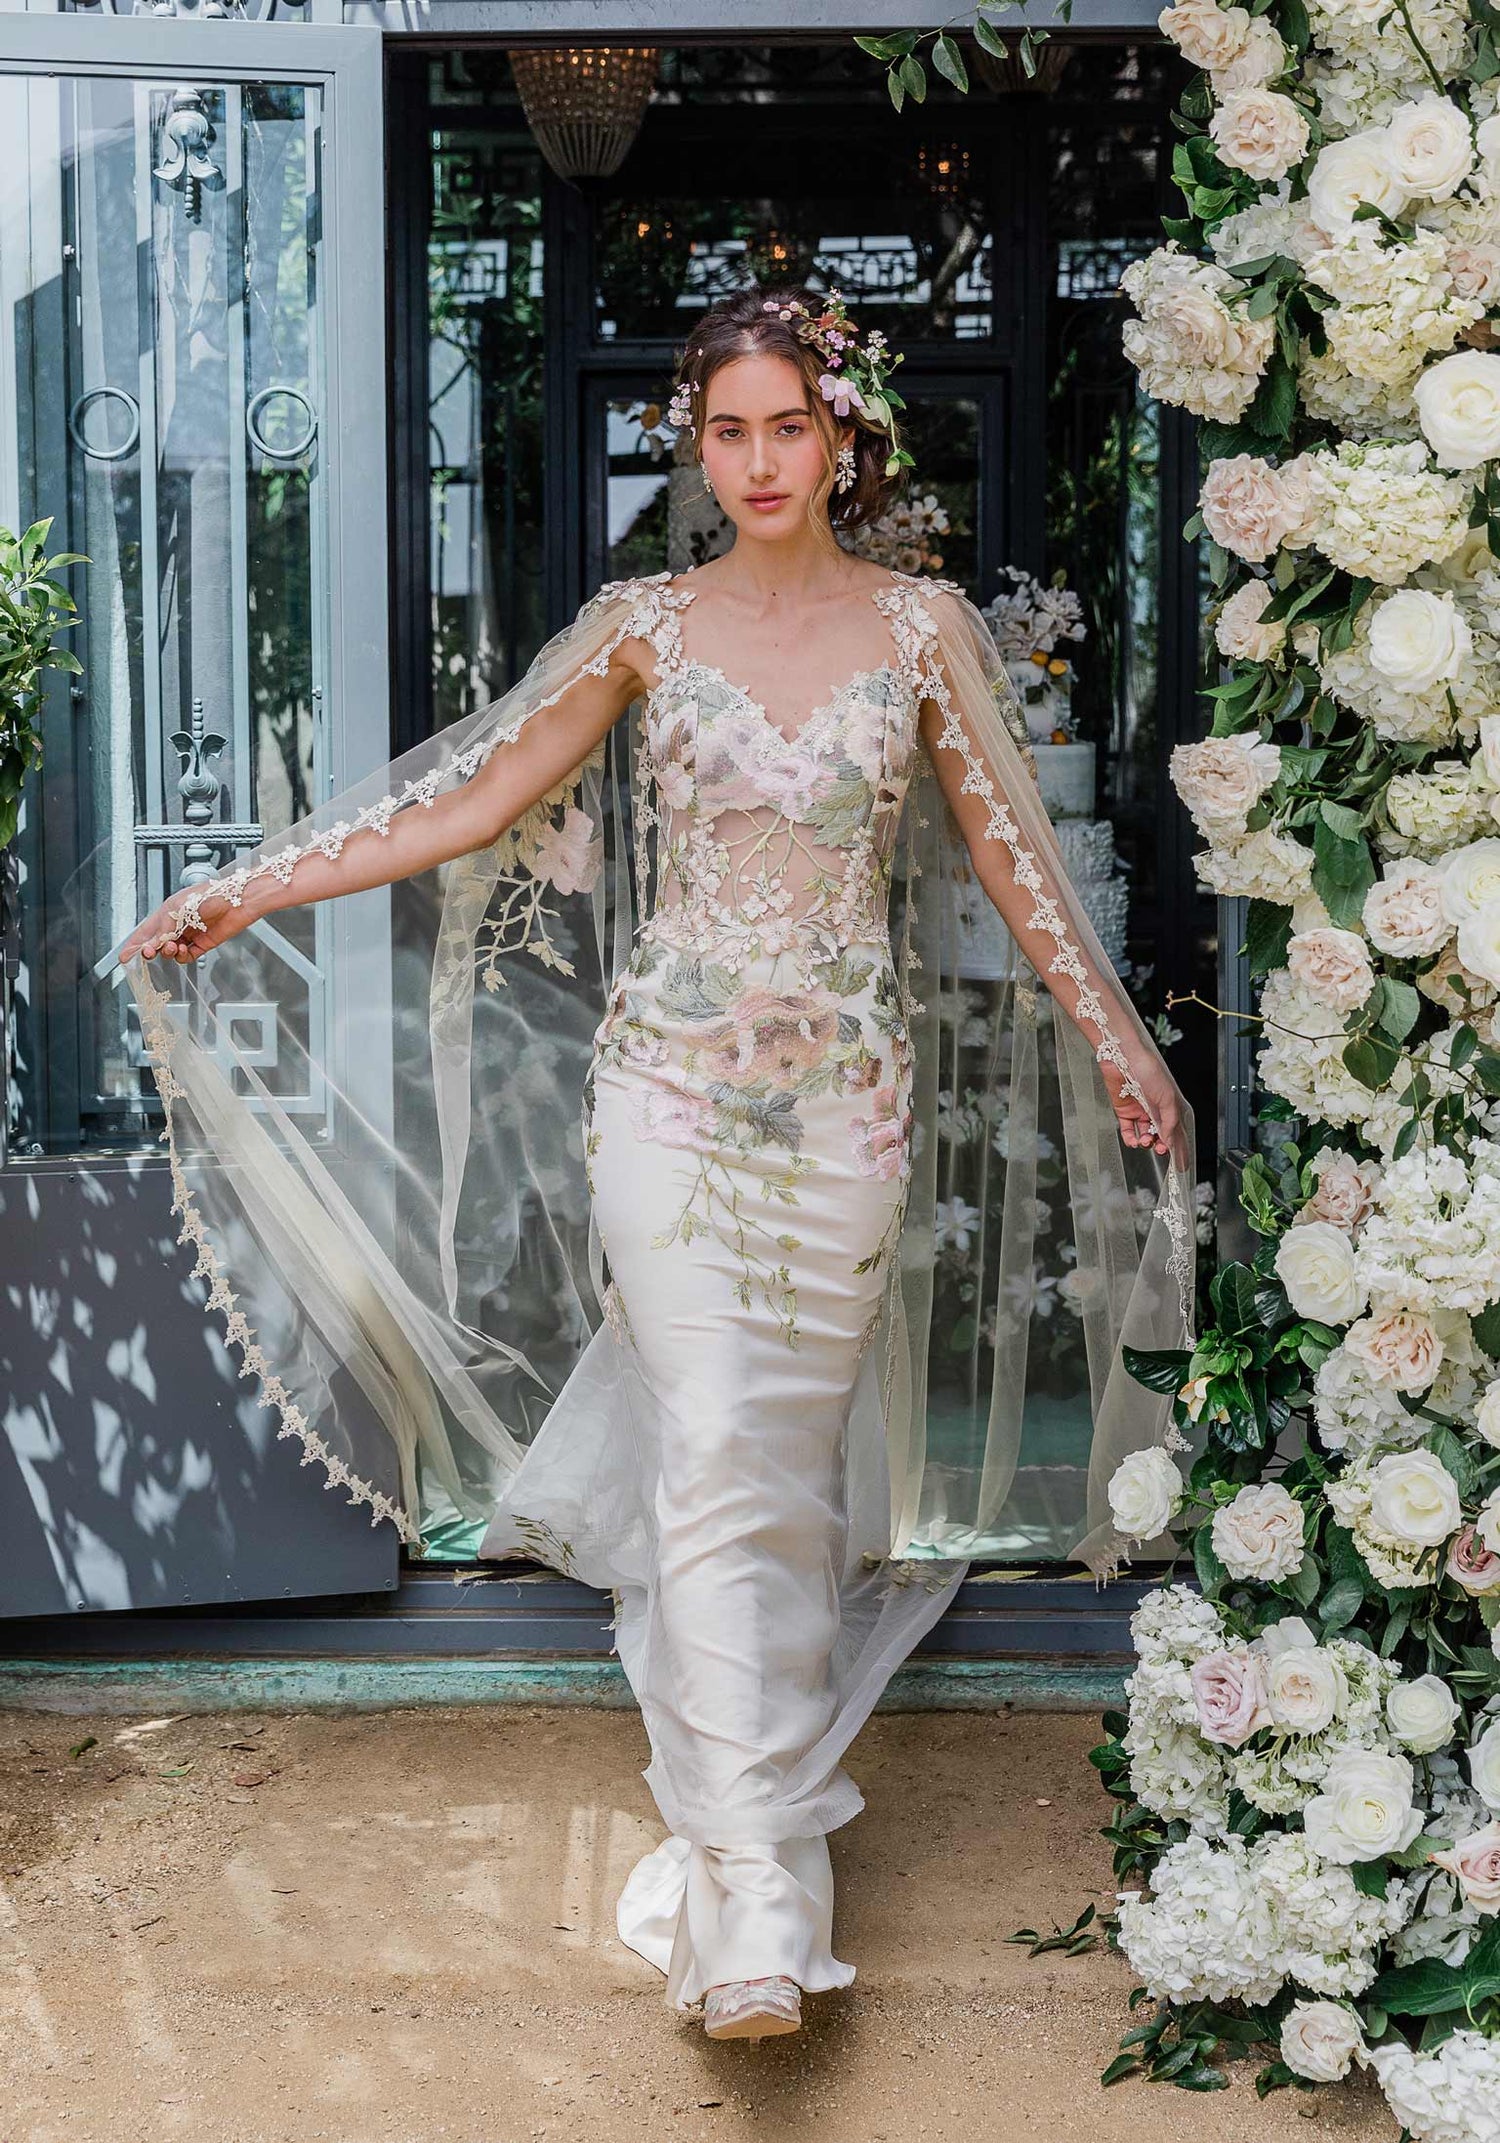 Wedding Dress Lingerie - Shop on Pinterest